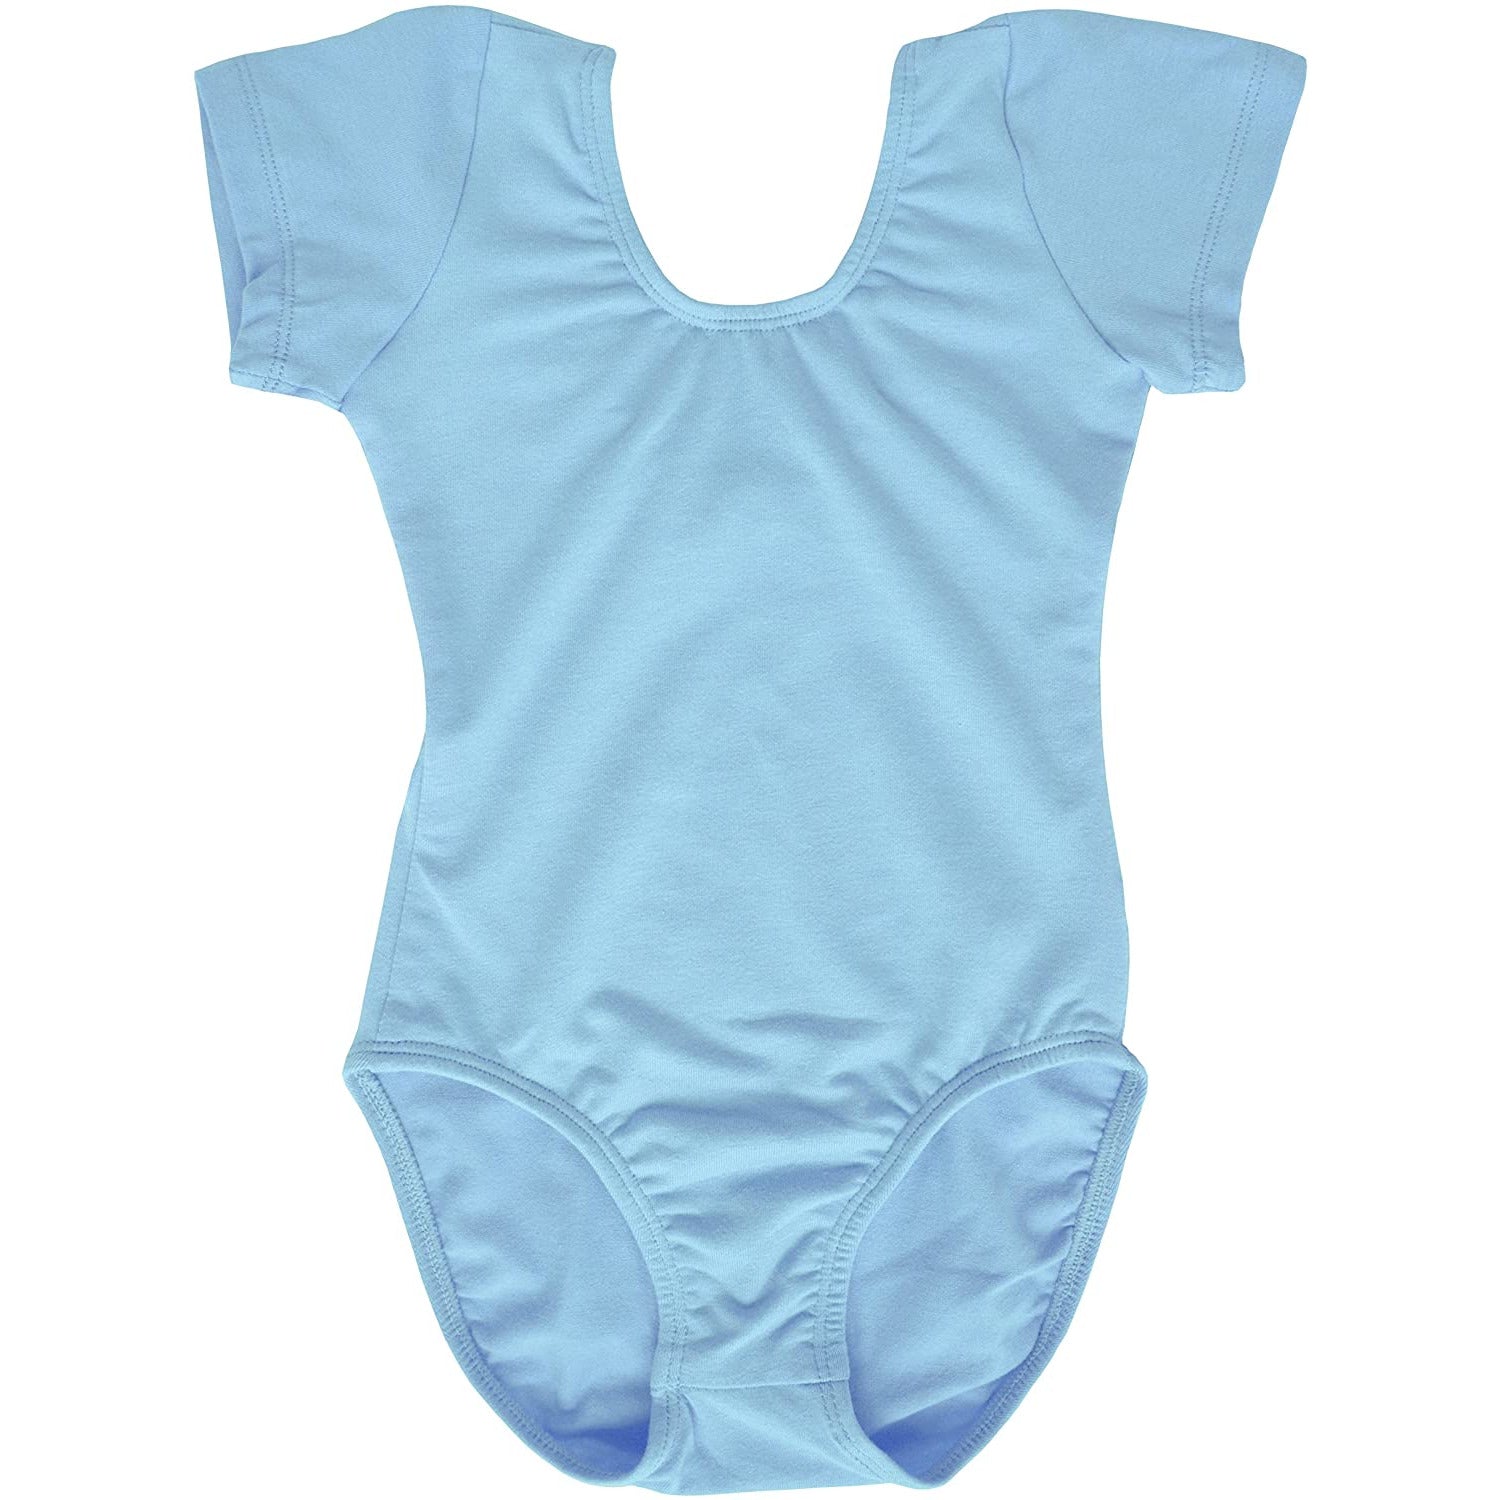 Dancina Short Sleeve Leotard for Toddlers & Girls in Light Blue